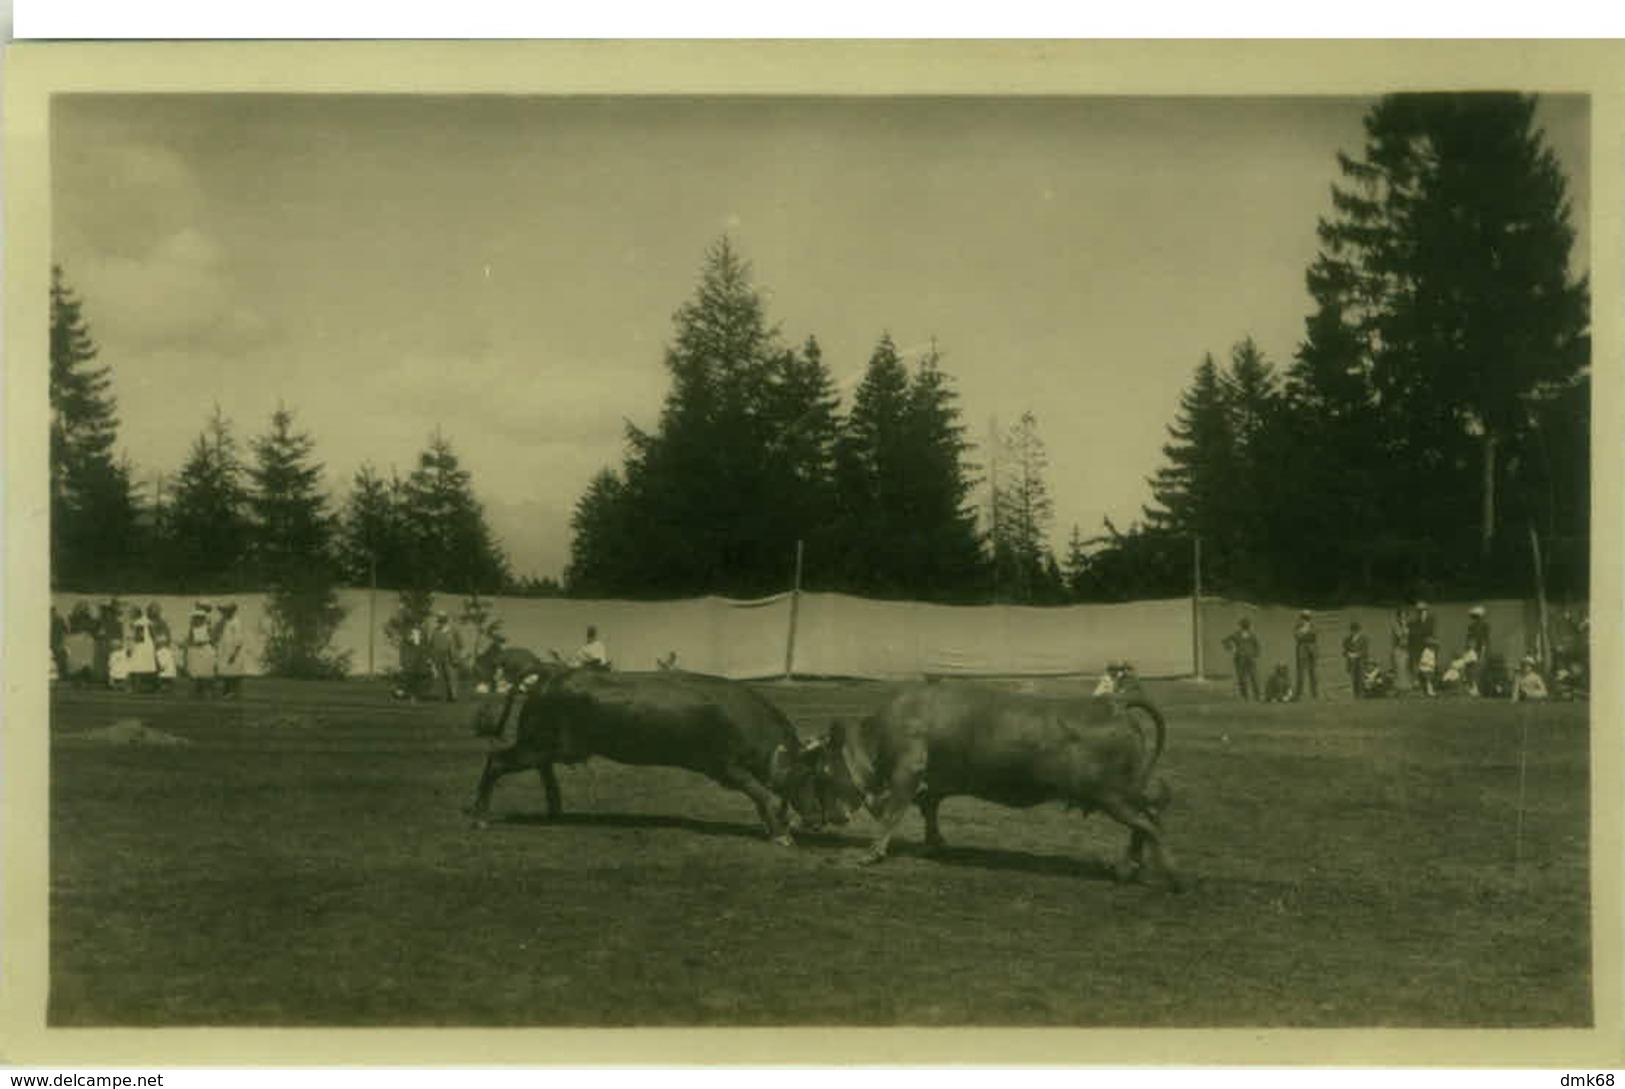 SWITZERLAND - CRANS / MONTANA - COMBAT DE REINES - PHOTO CH. DUBOST - 1930s ( 7124) - Crans-Montana